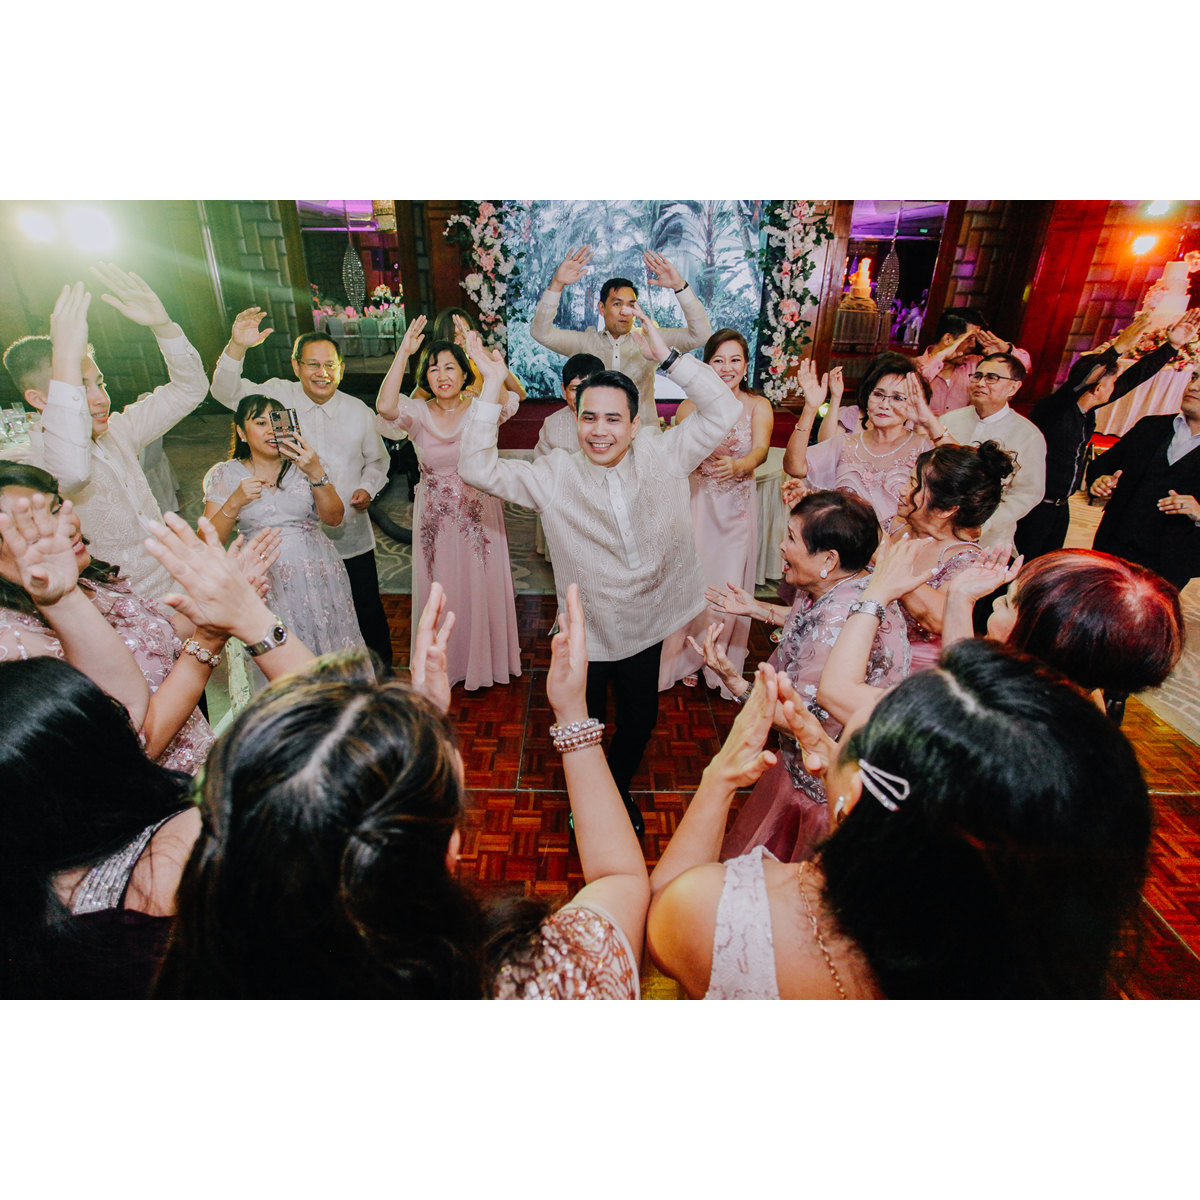 shang mactan wedding0067 - Coleen & Seigfred's Shangrila Mactan Cebu Destination Wedding